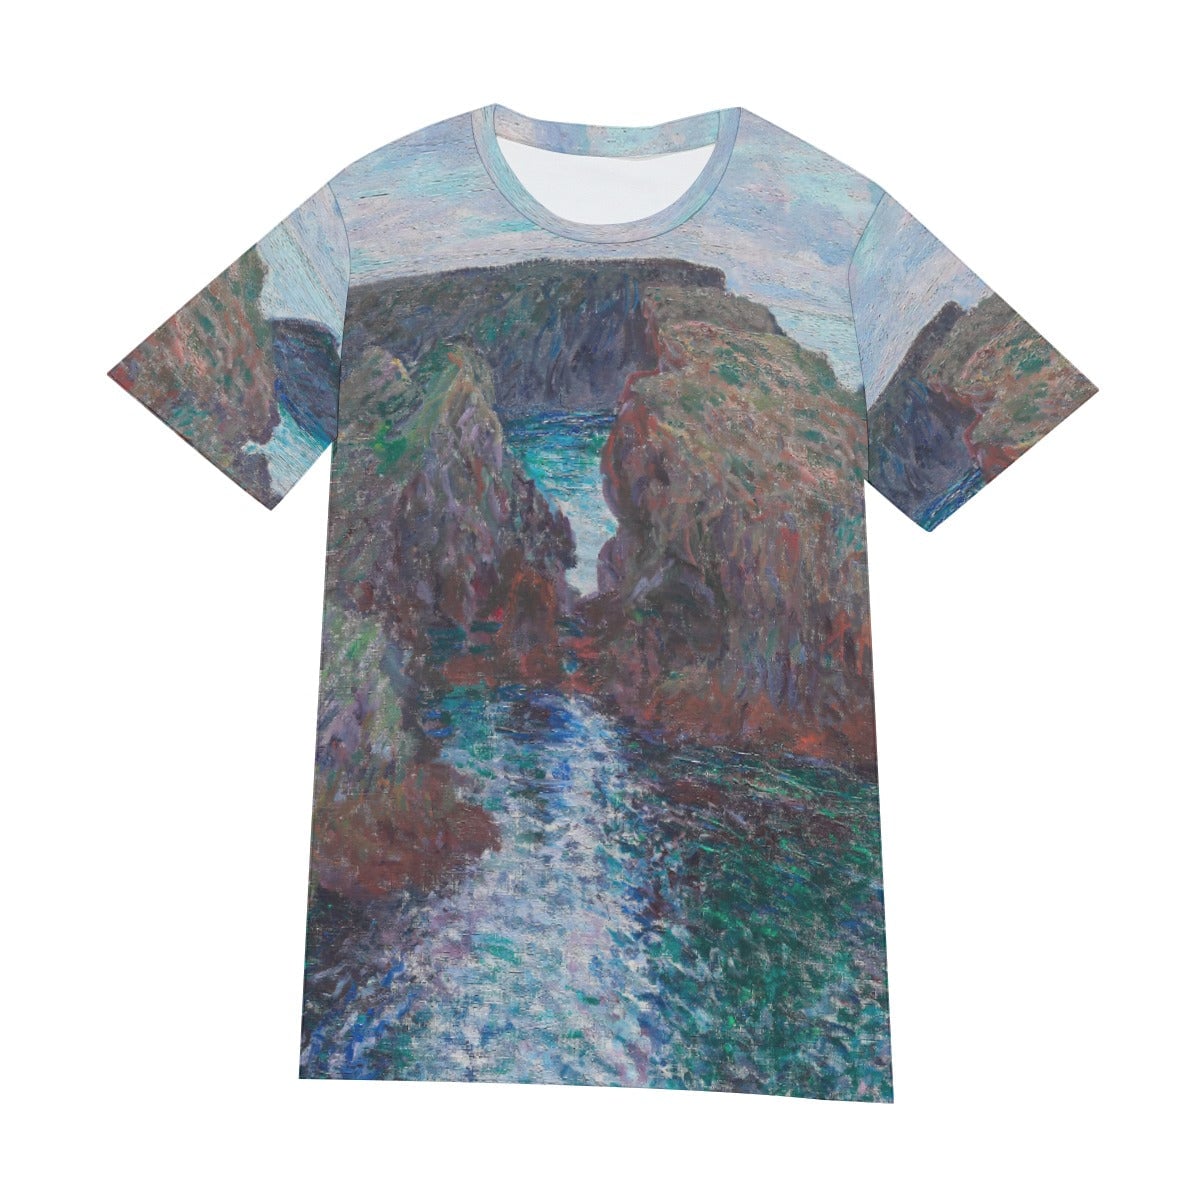 Belle-Ile Rocks at Port-Goulphar by Claude Monet T-Shirt